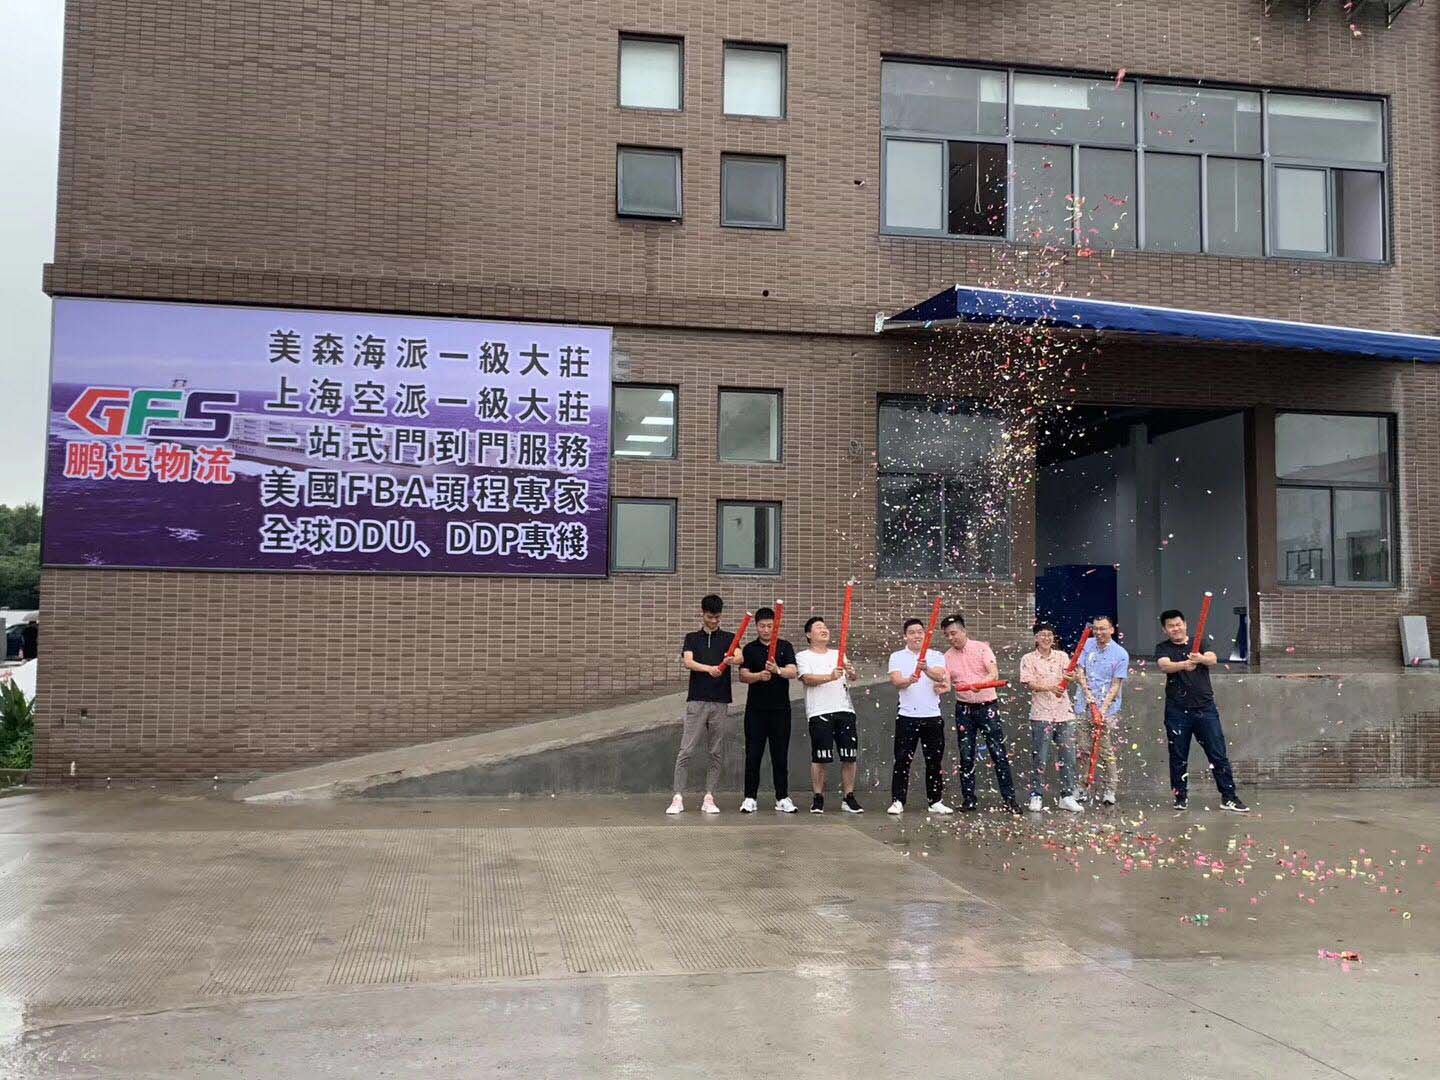 Warmly celebrate the establishment of Pengyuan International-Shanghai Branch